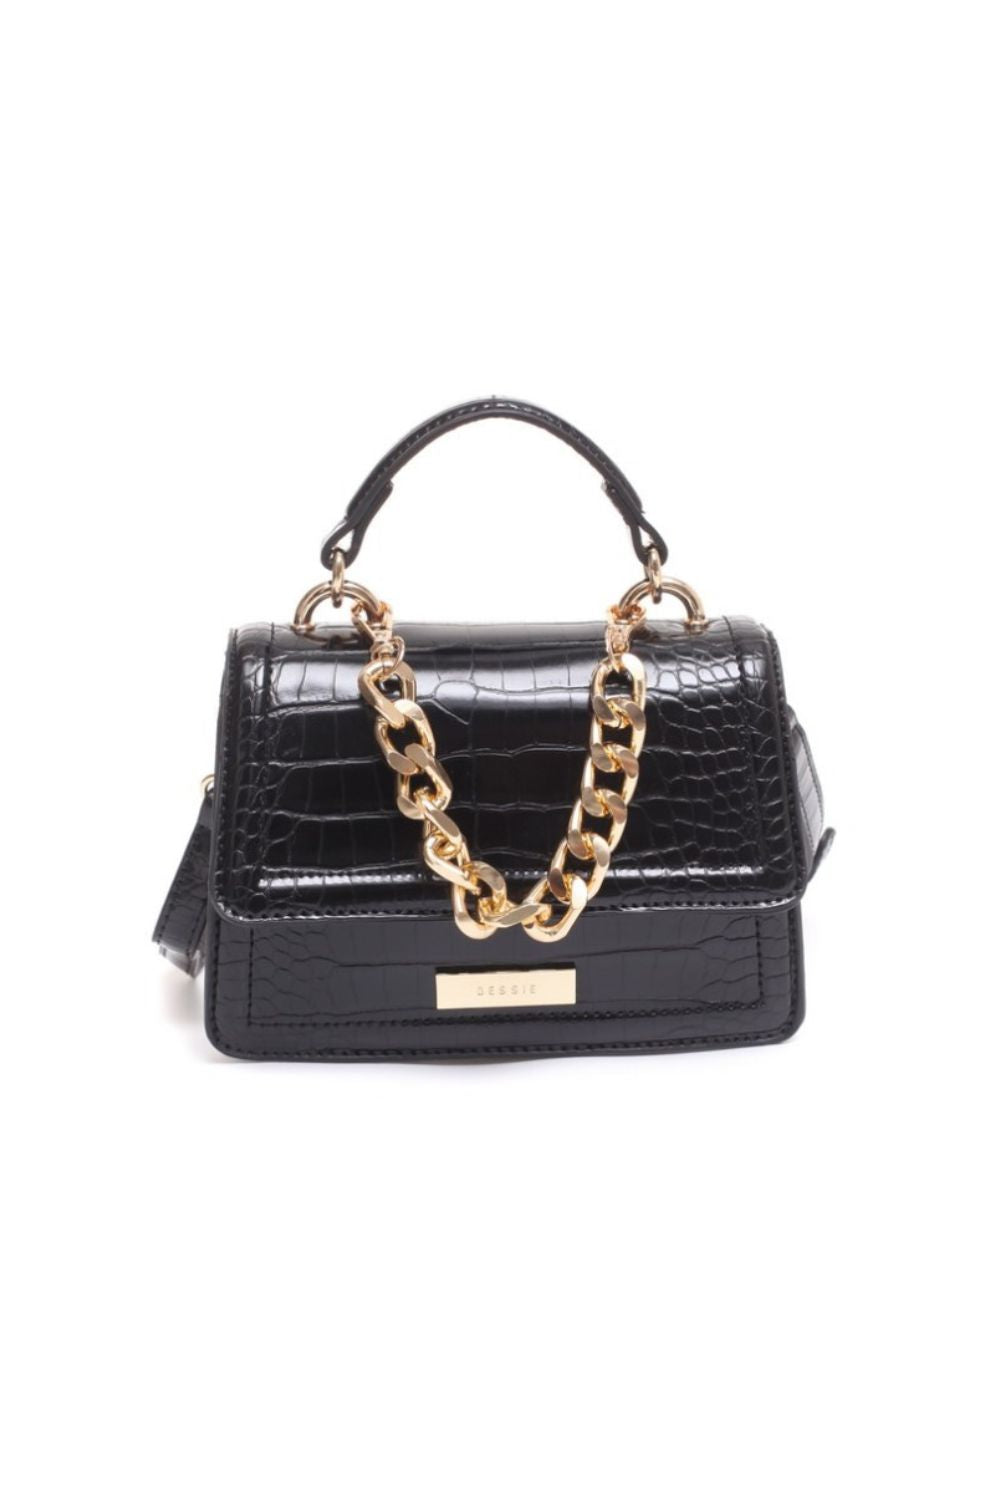 Bessie Handbags Mini Moc Croc Bag with Chain in Black